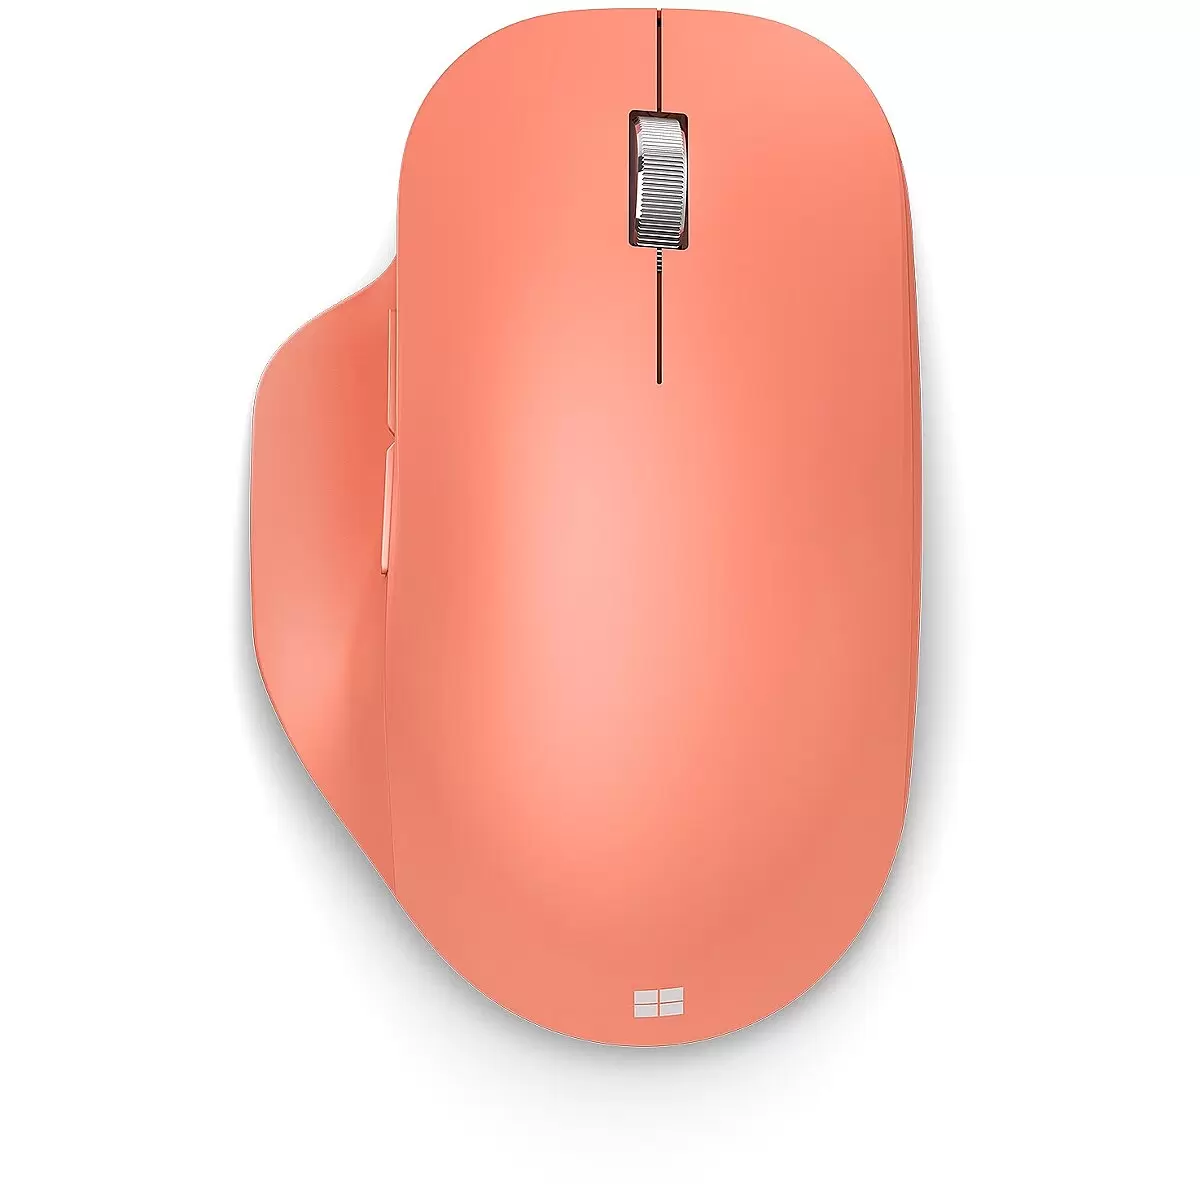 MS Bluetooth Ergonomic Mouse BG Peach